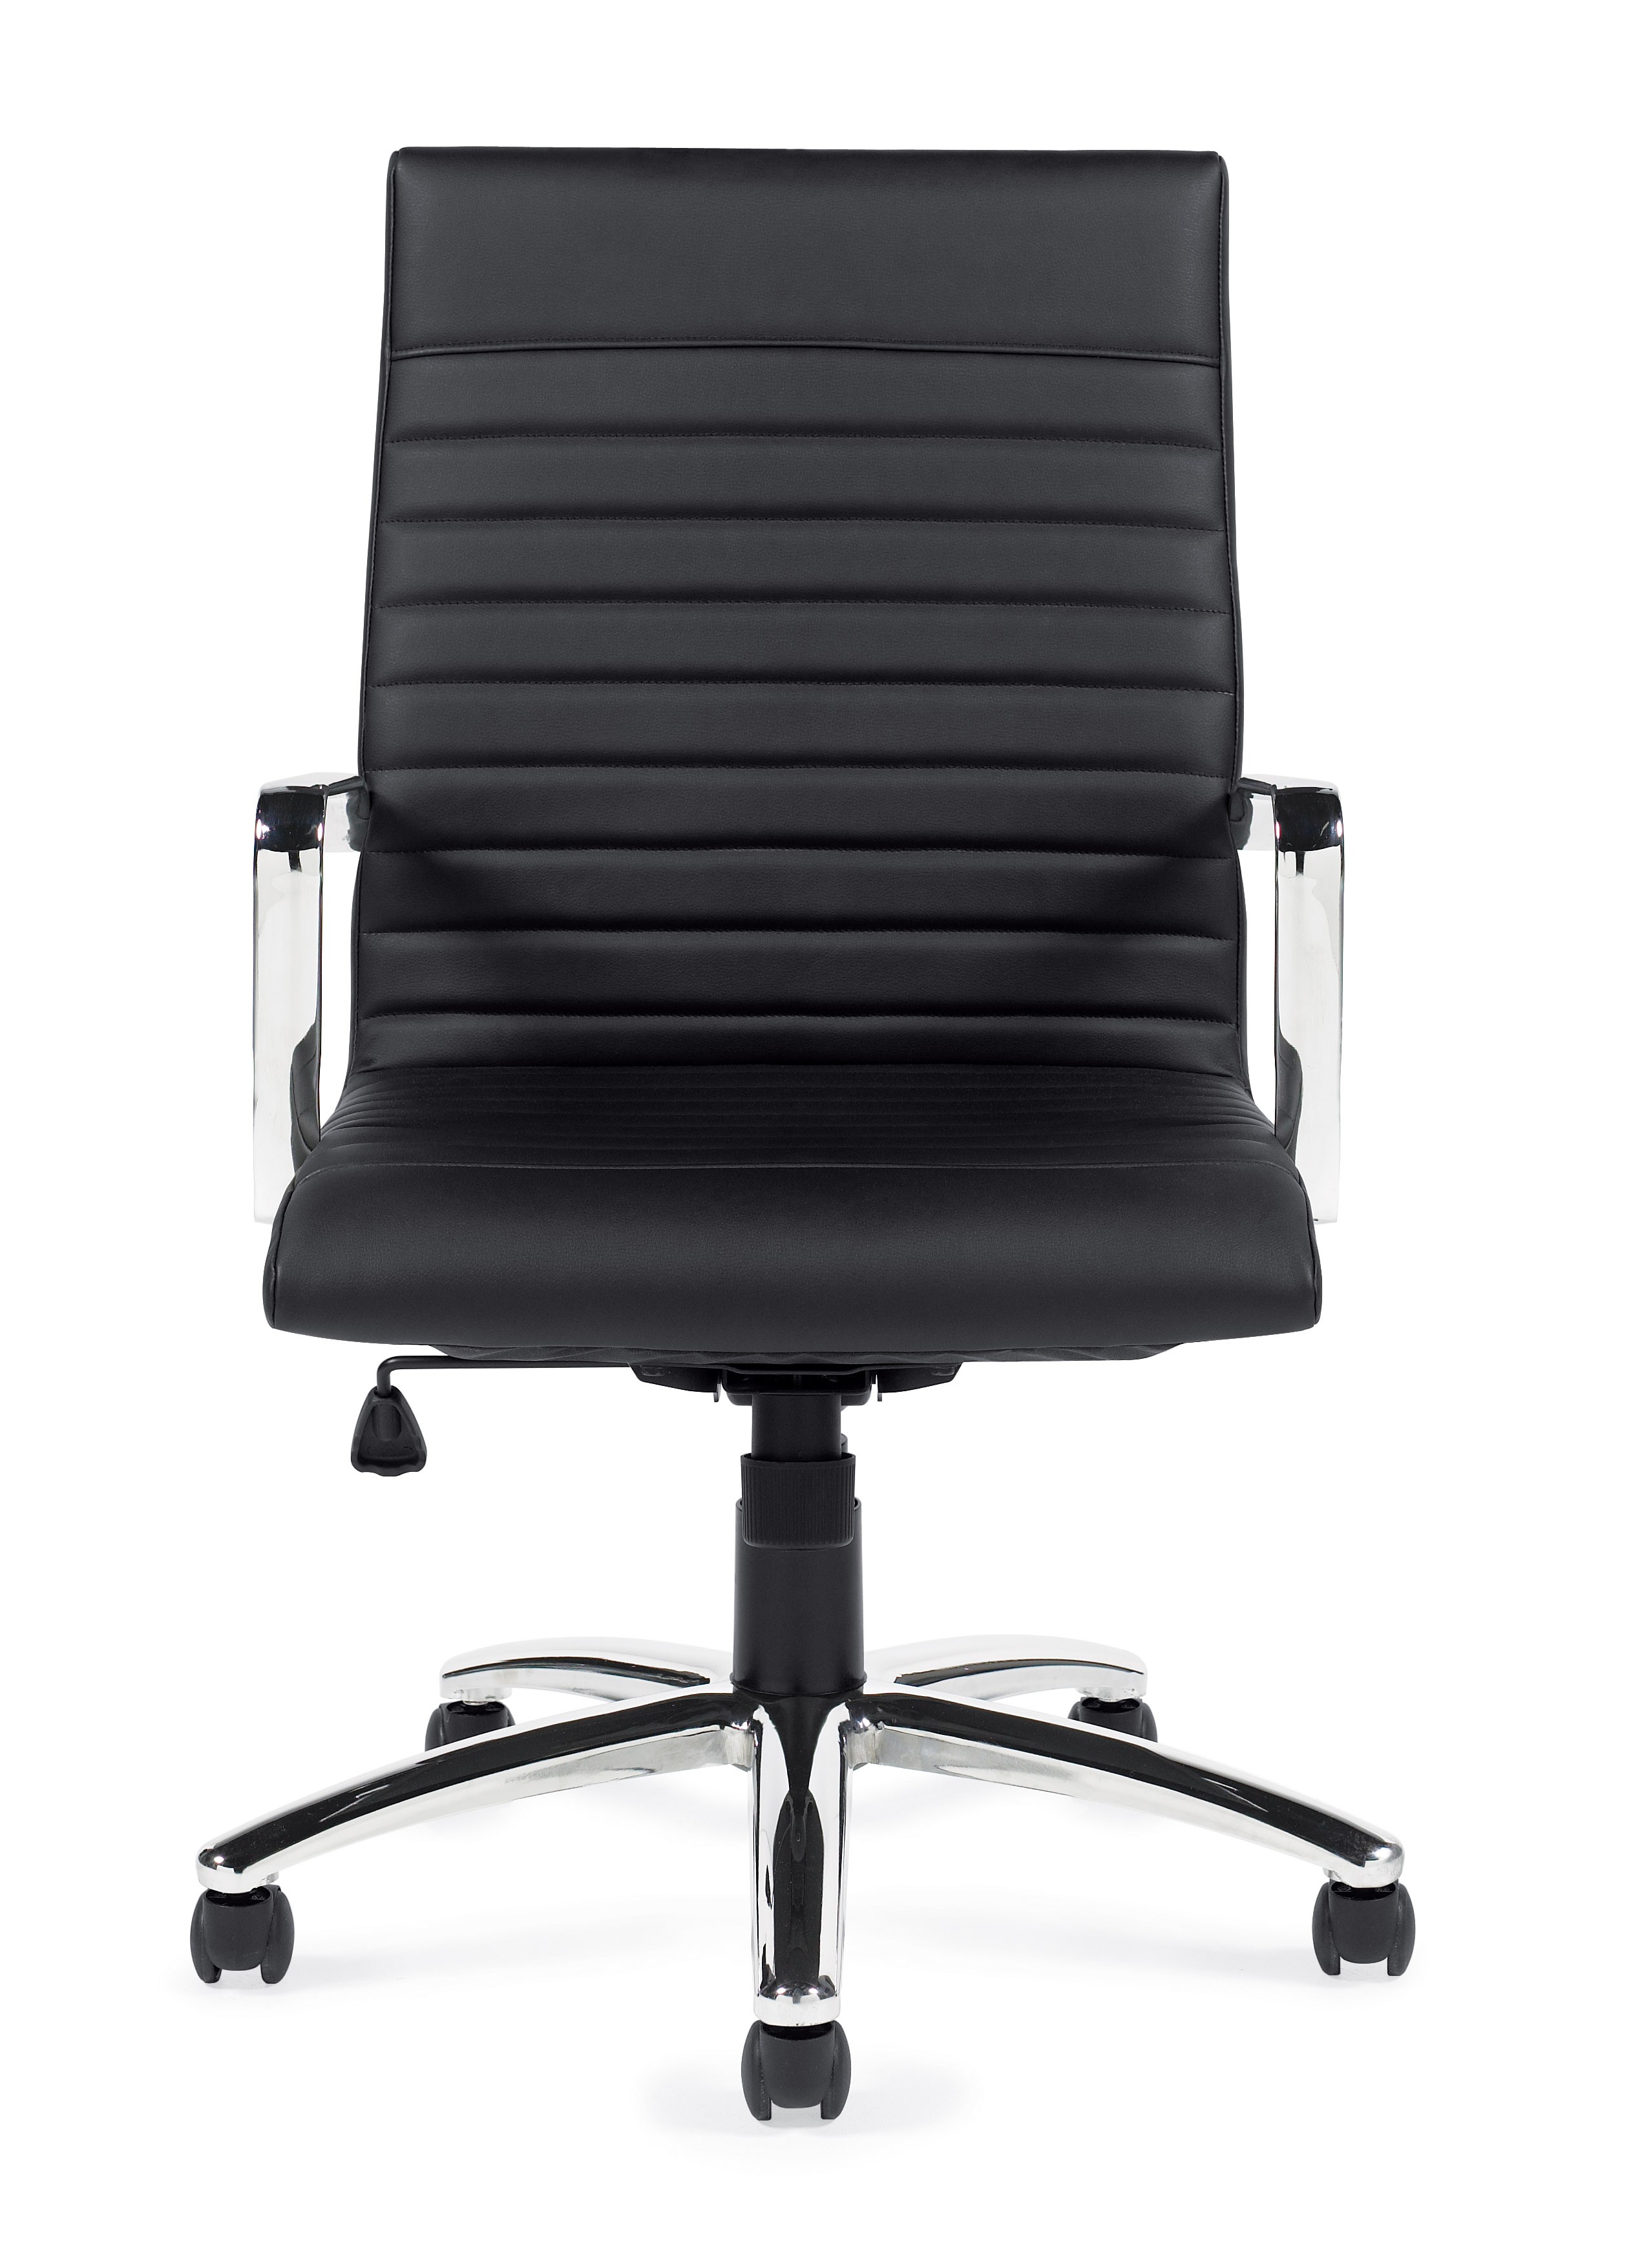 Luxhide Executive Chair